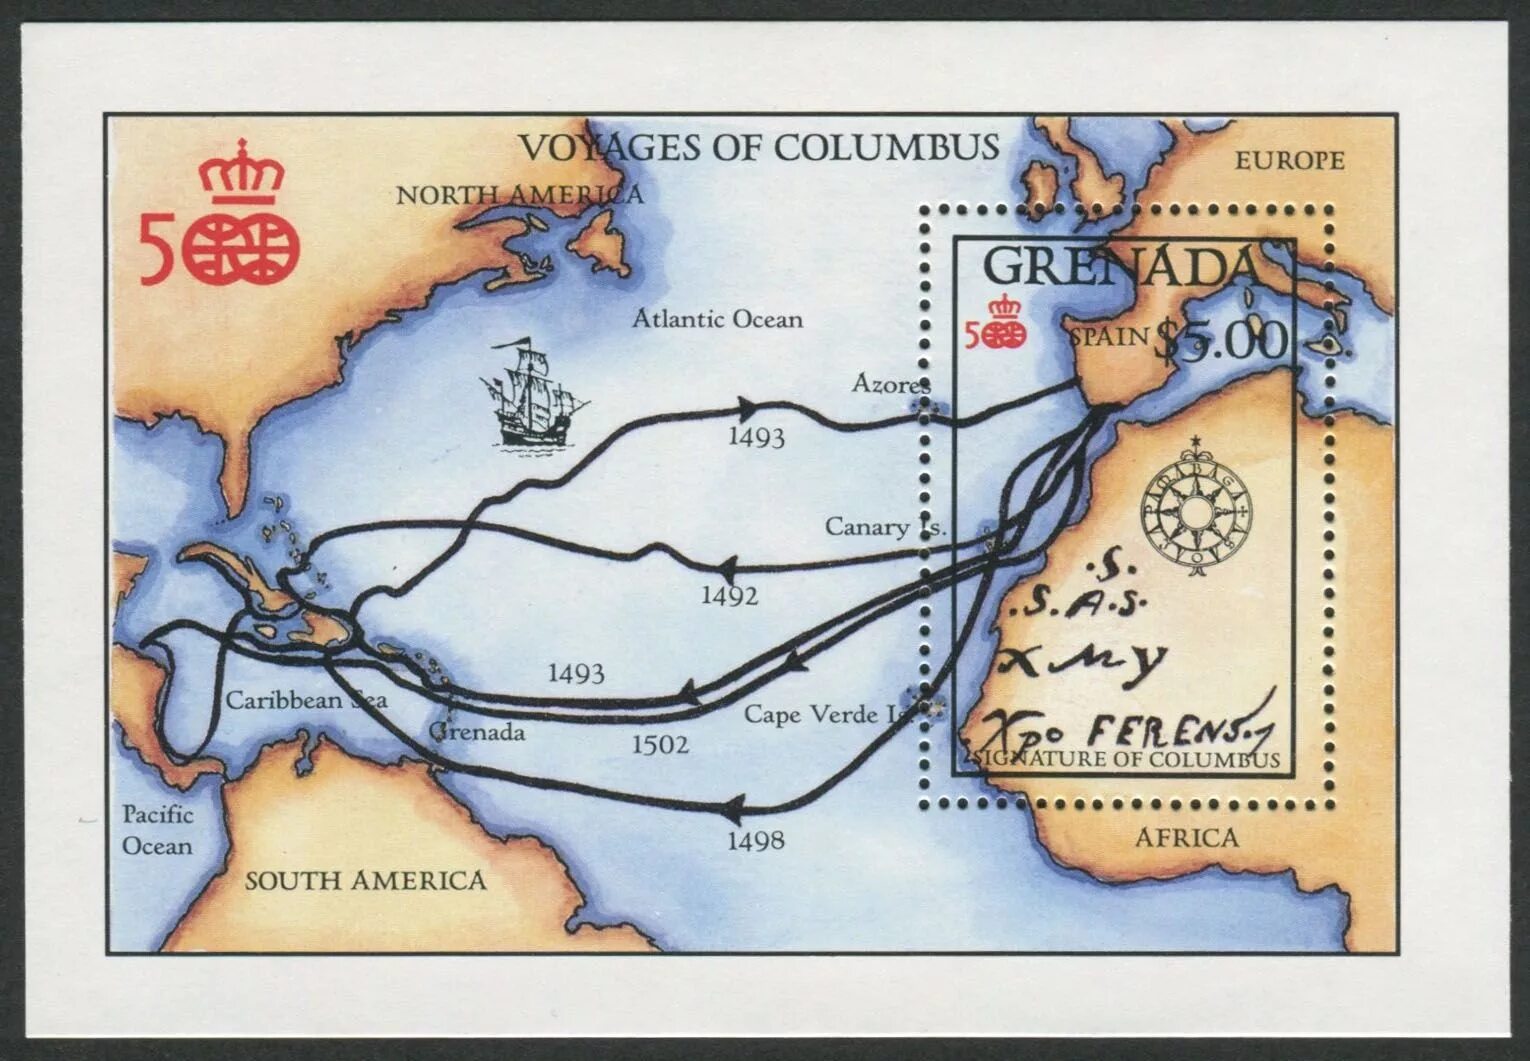 Путешествие колумба на карте. Открытие Америки Христофором Колумбом путь. Карта открытий Христофора Колумба. Маршрут путешествия Христофора Колумба.